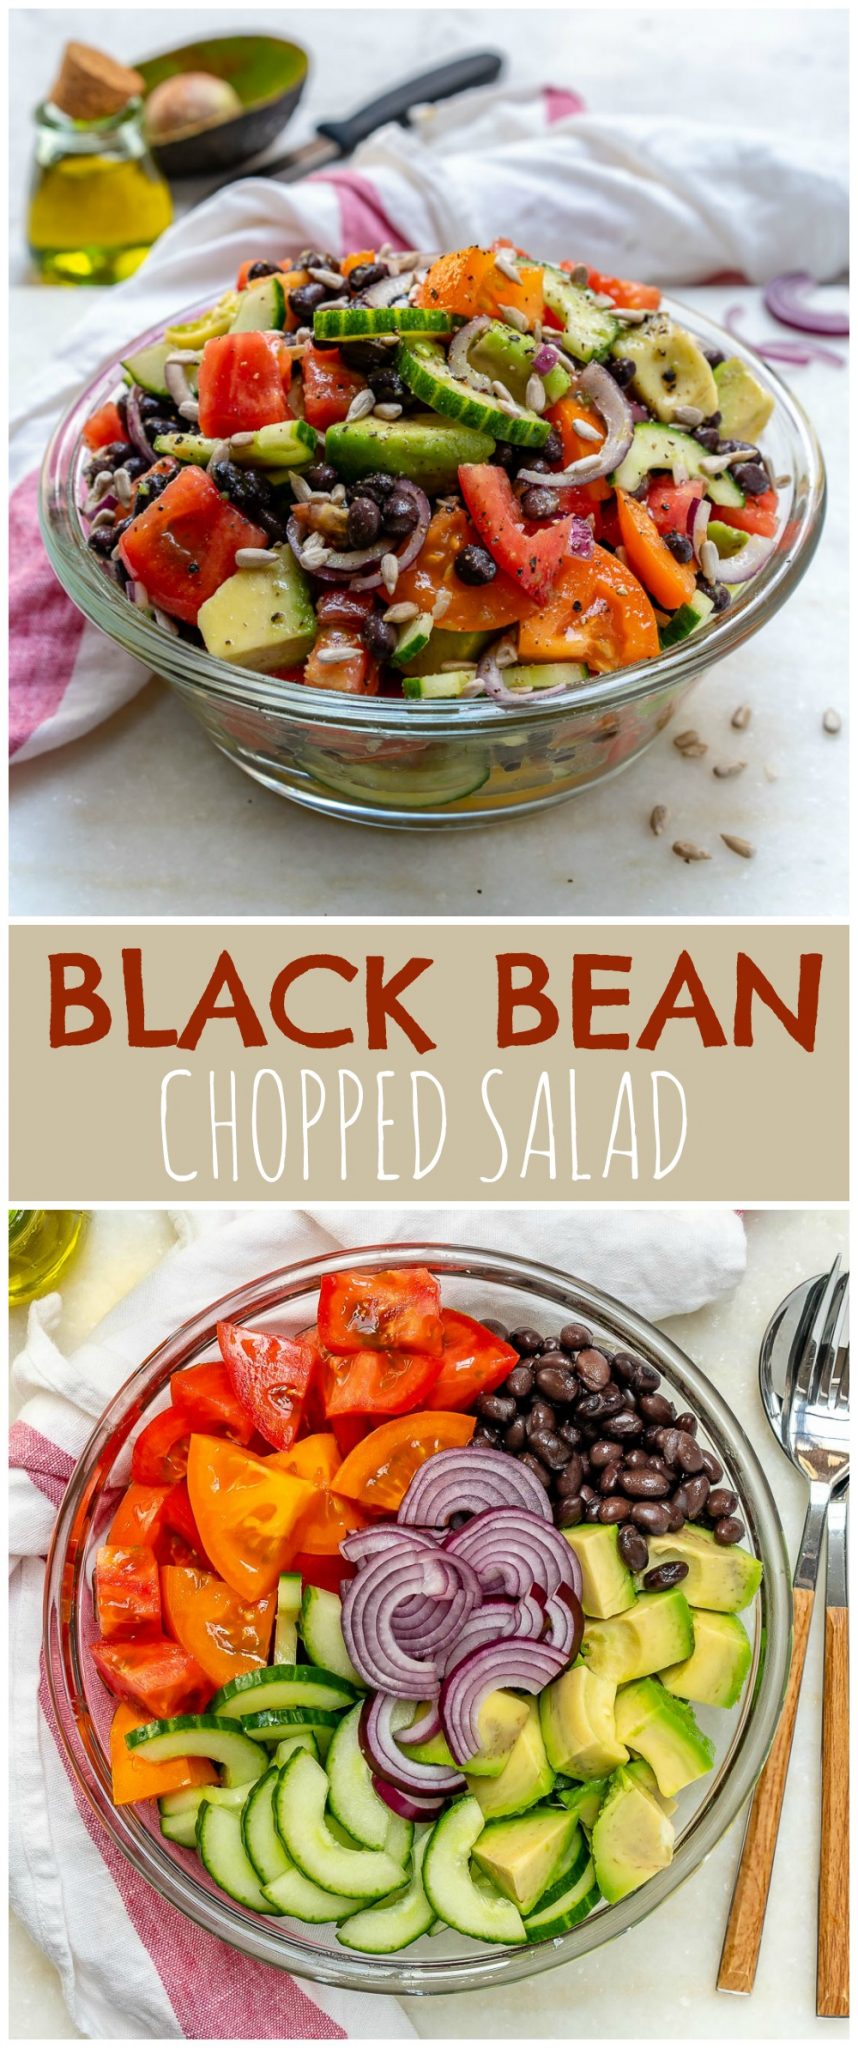 Special Black Bean Chopped Salad